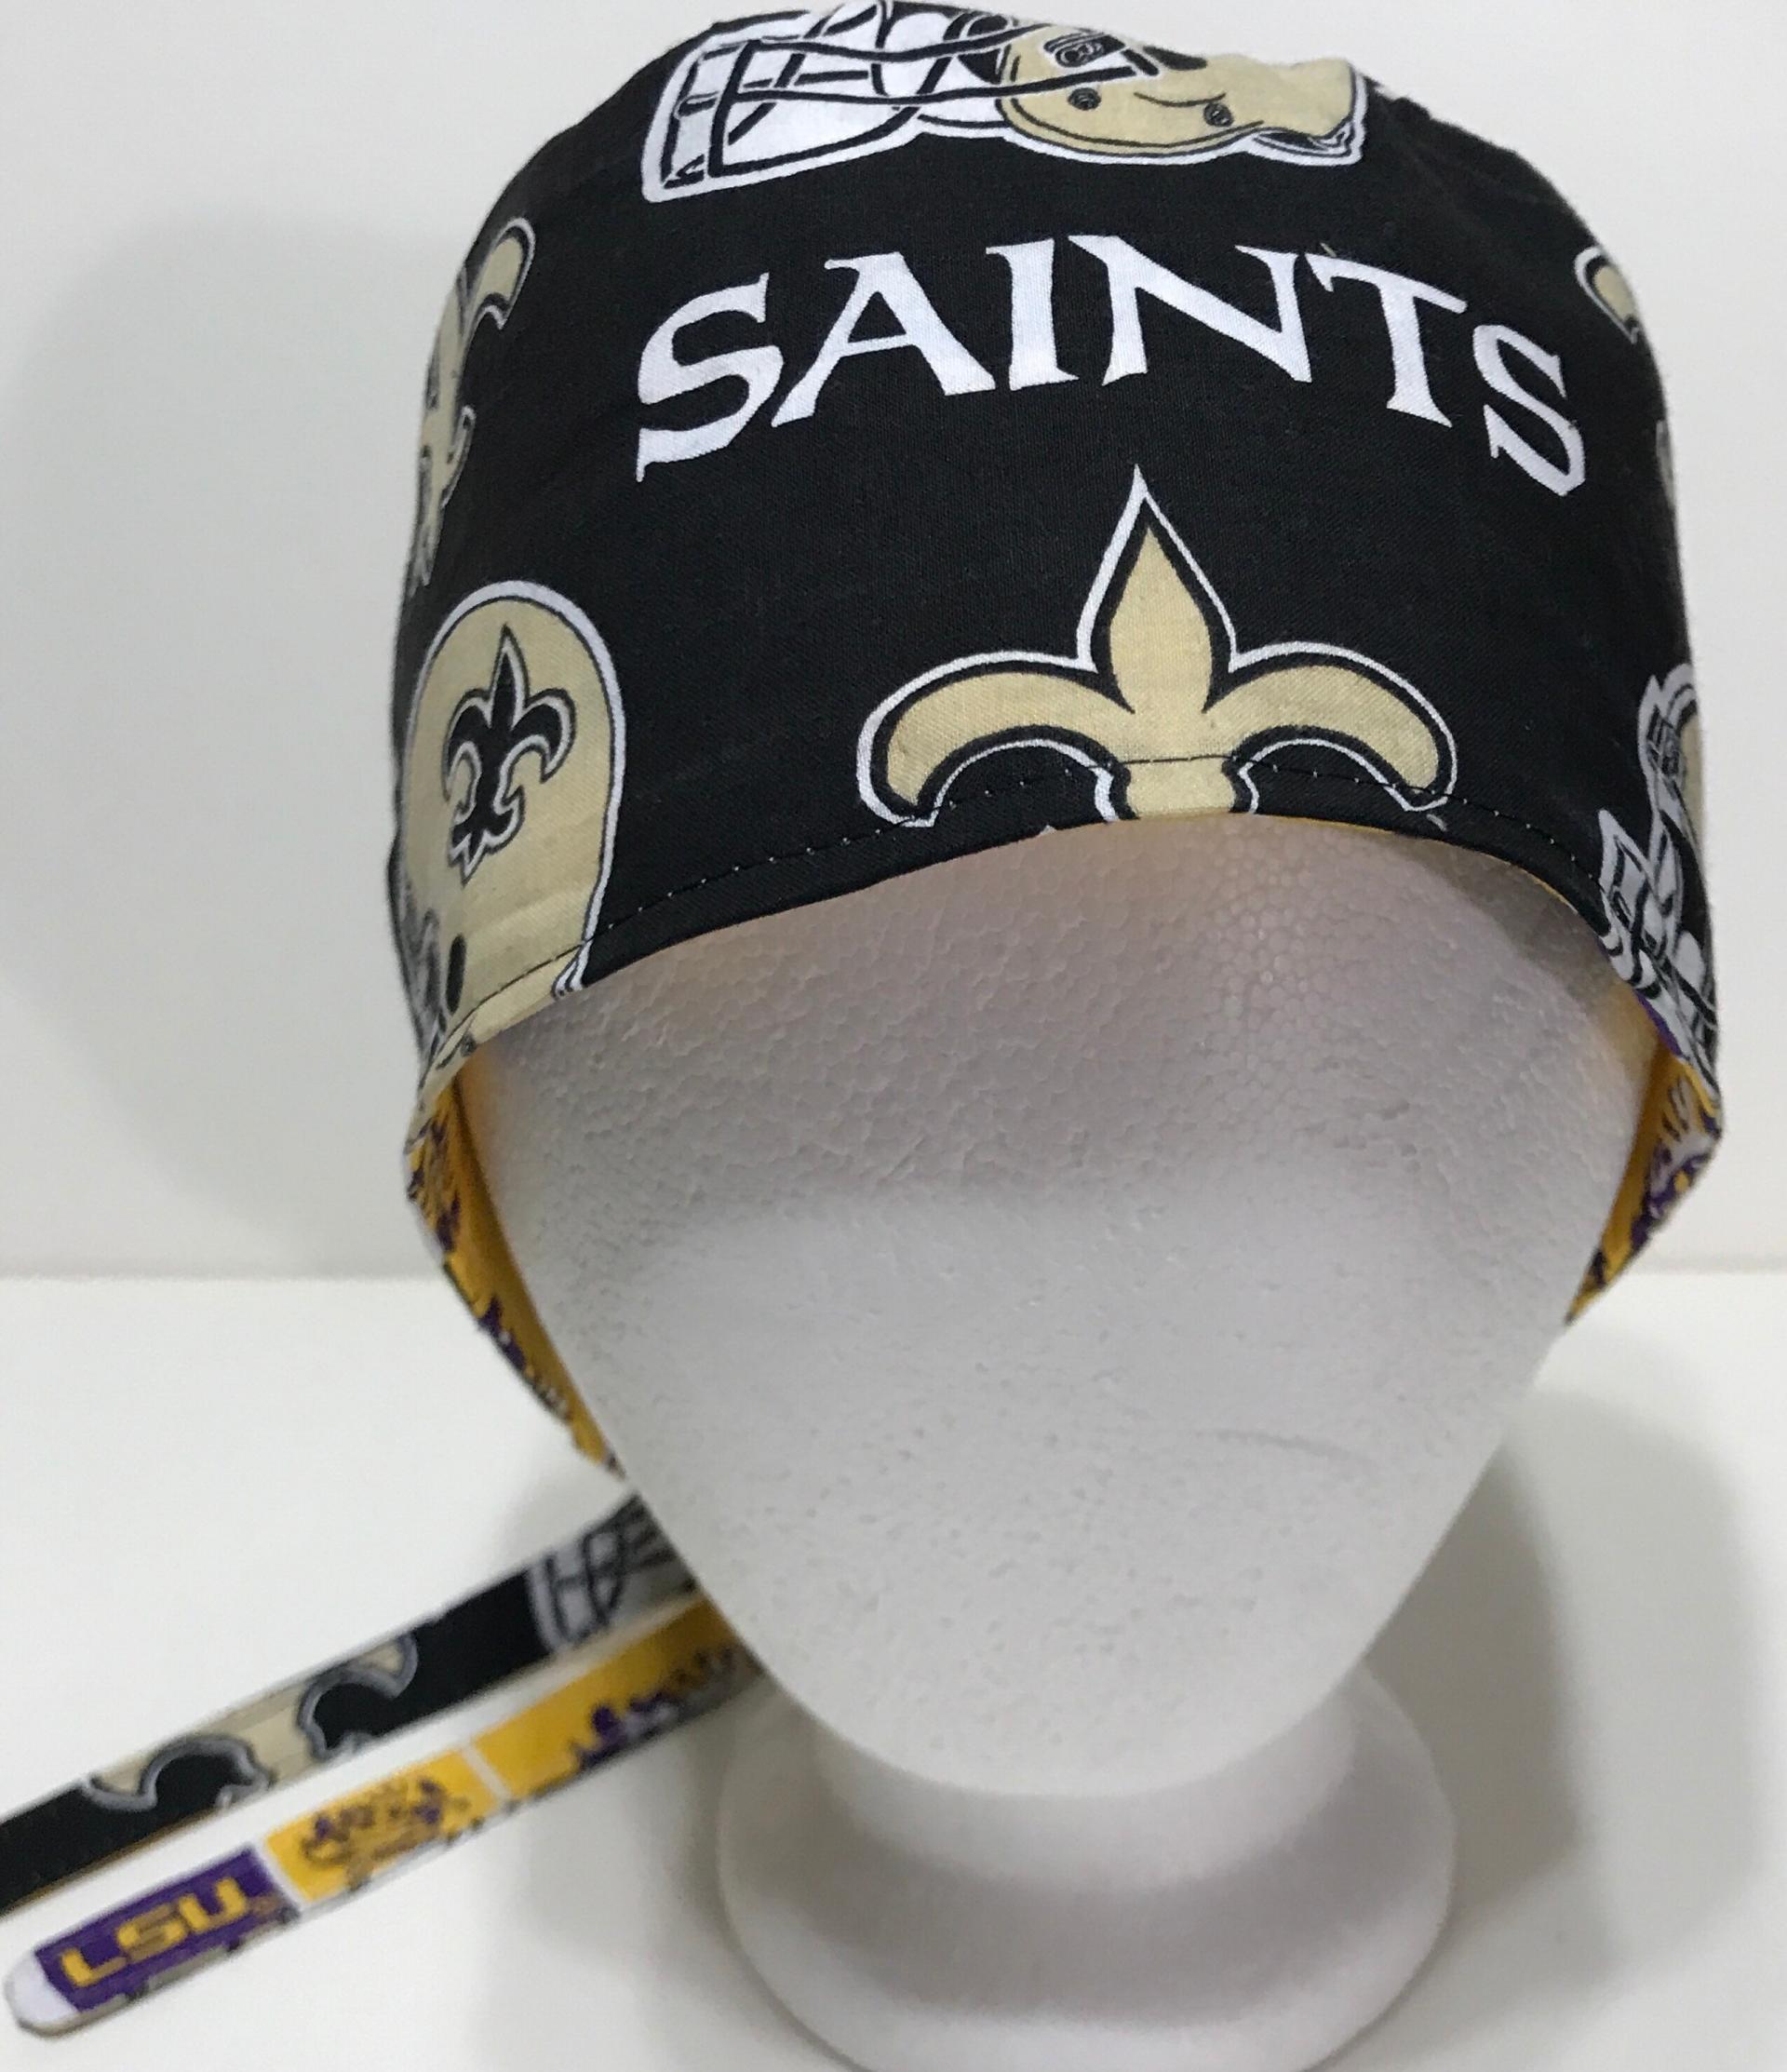 Reversible New Orleans Saints & LSU scrub cap, handmade, tie back, cotton, unisex, skull cap, welding, biker nurse technician doctor, Louisiana